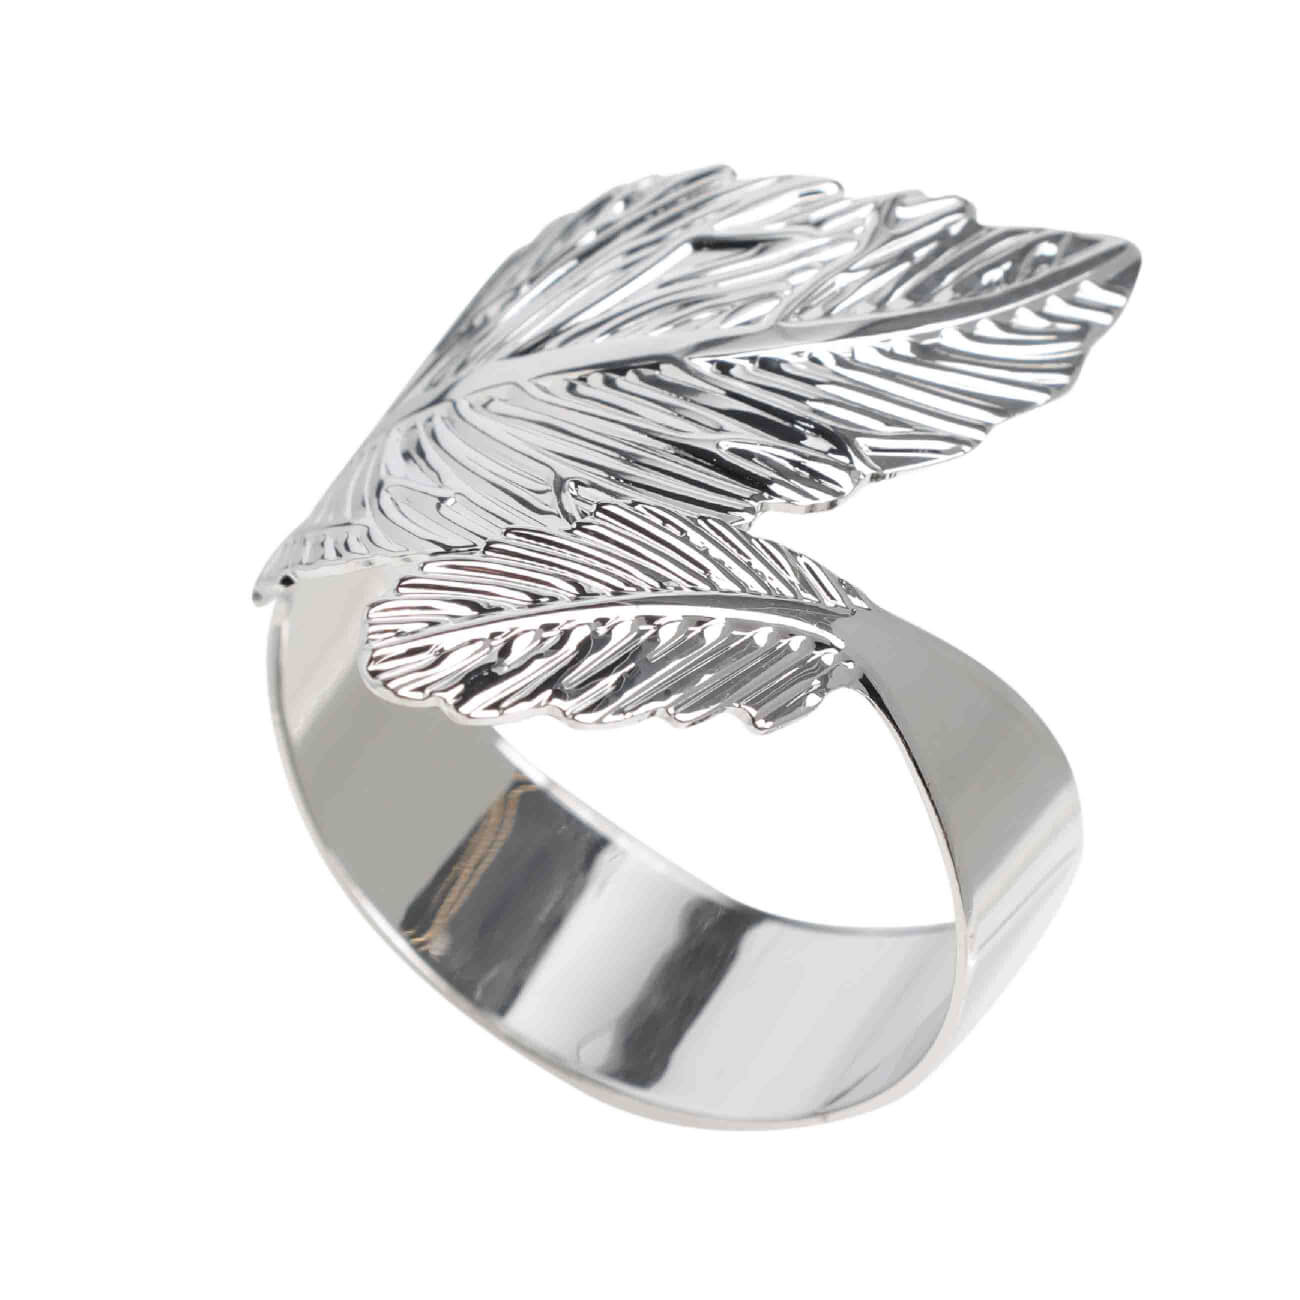 Кольцо для салфеток, 5 см, металл, серебристое, Листья, Print кольцо для карниза d 28 33 мм 10 шт серебряный